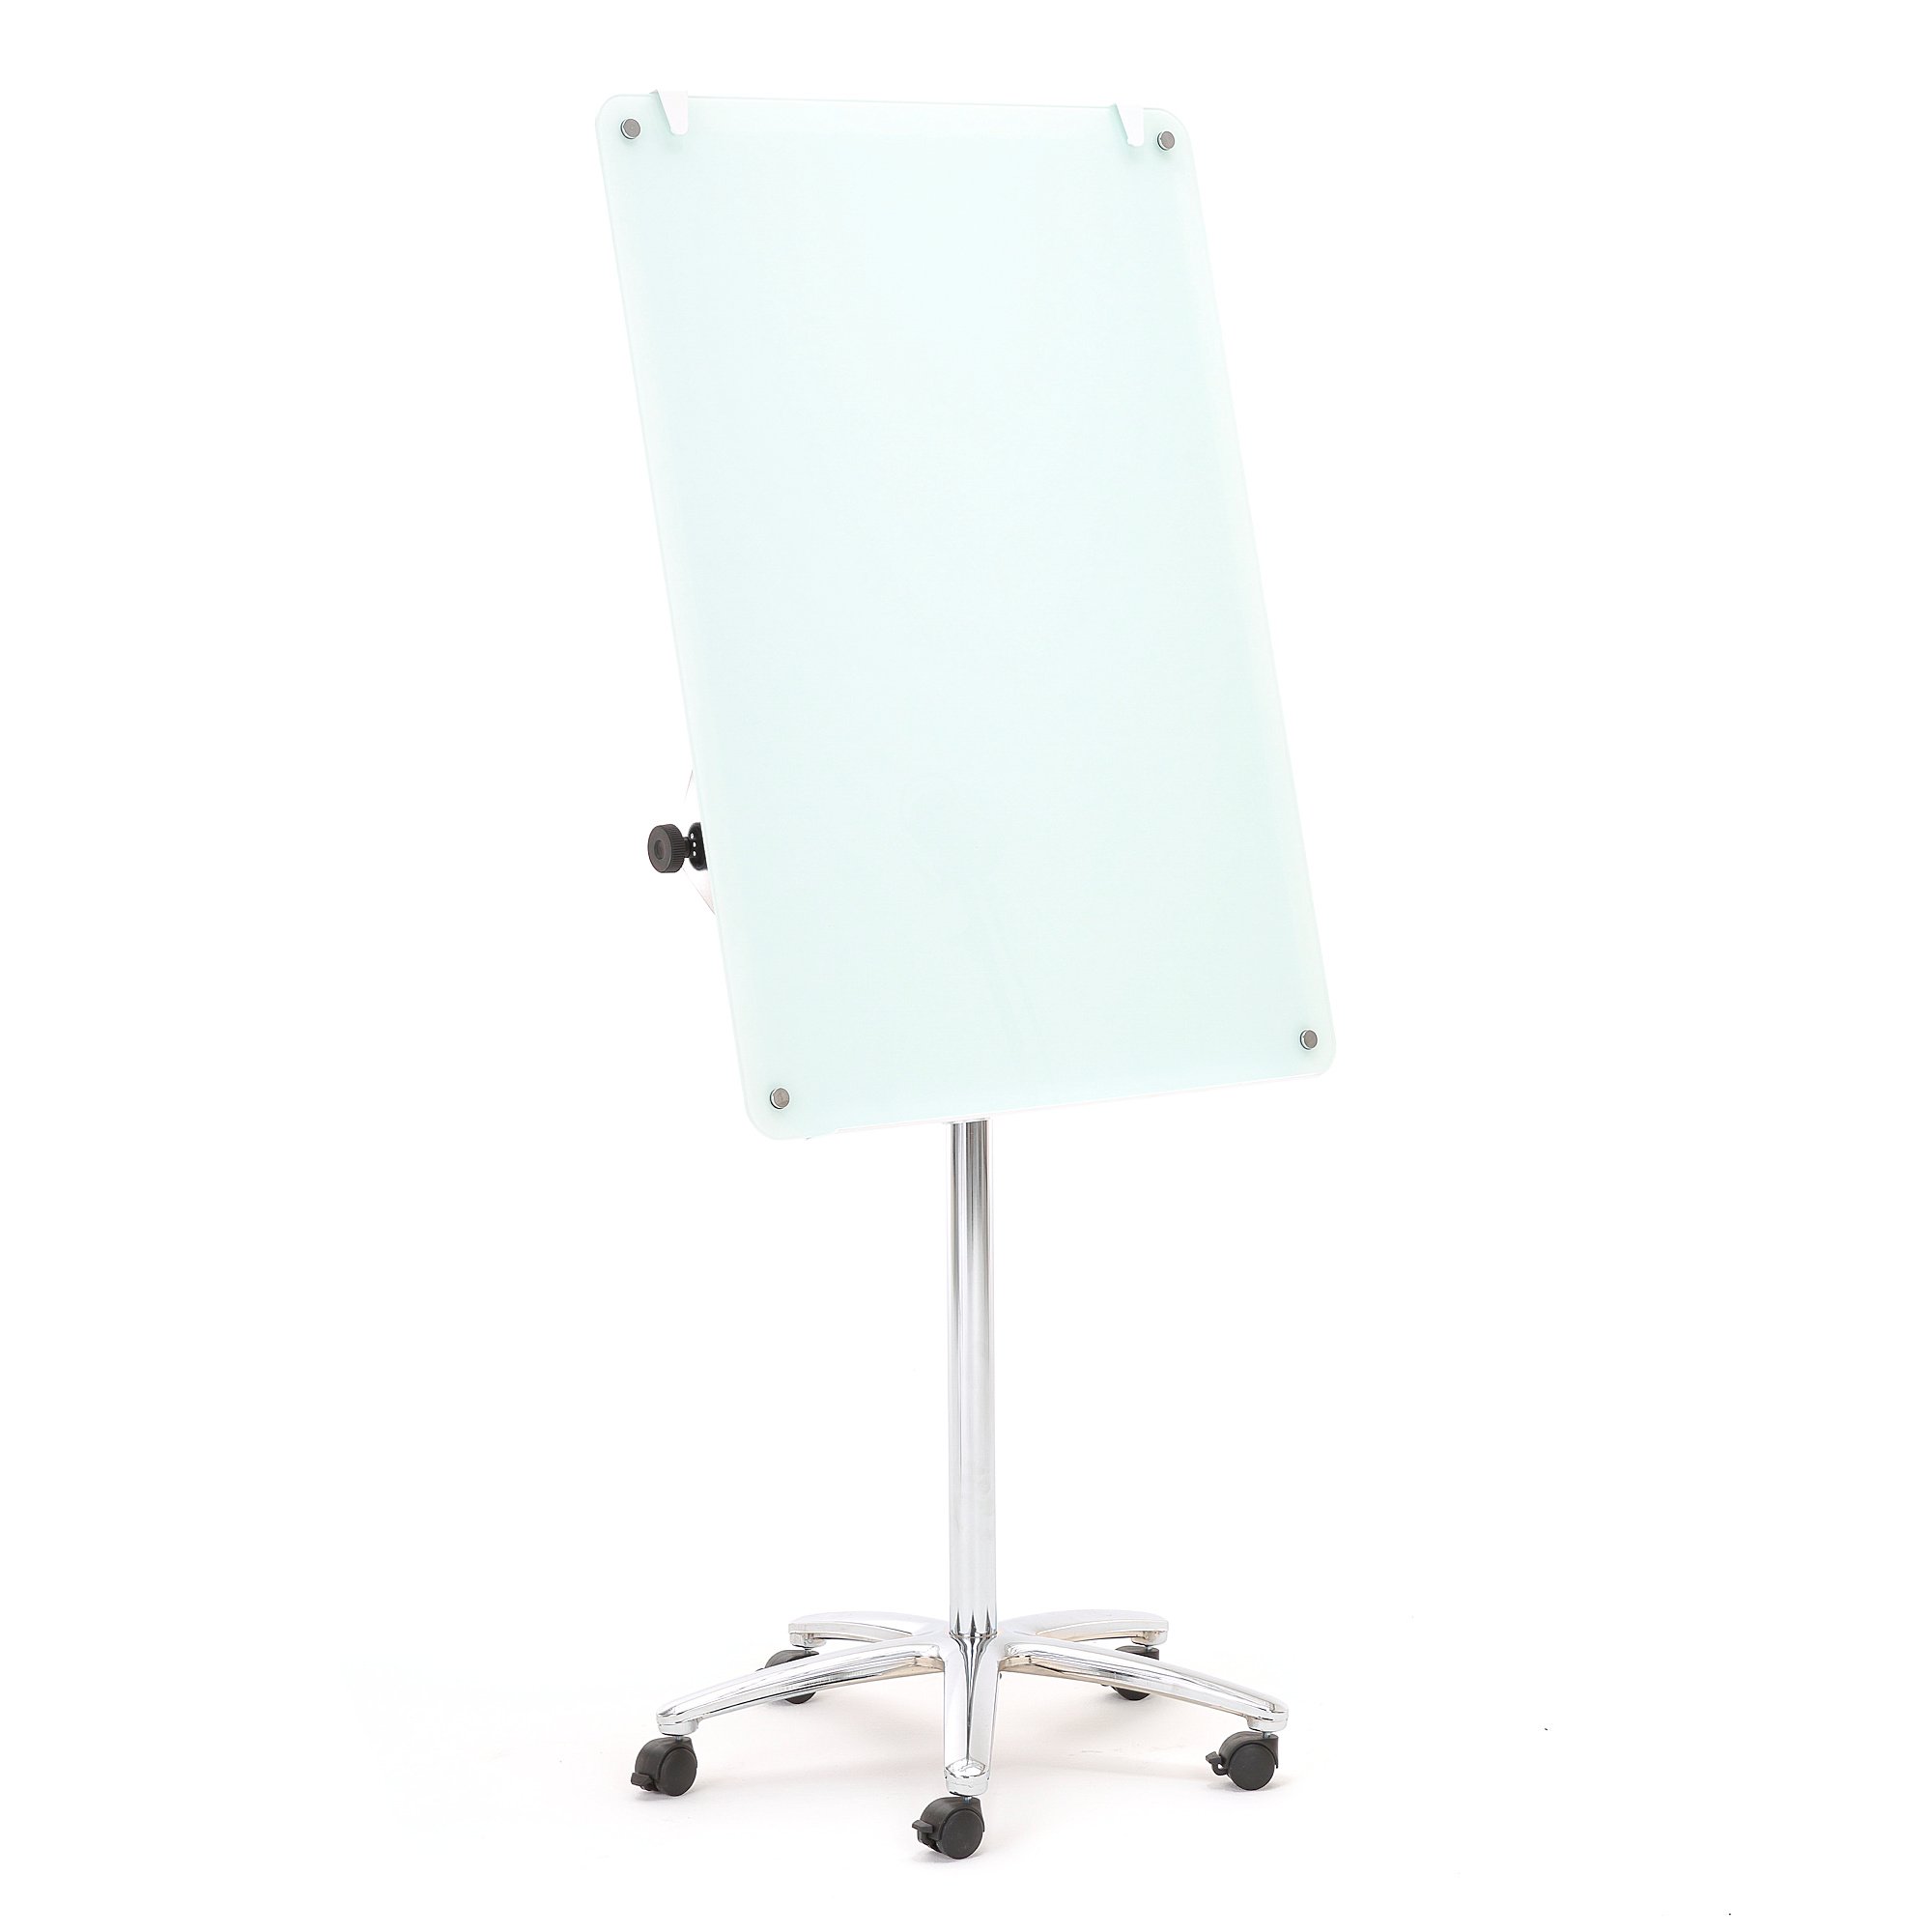 E-shop Magnetická sklenená tabuľa s kolieskami GLENDA, biela